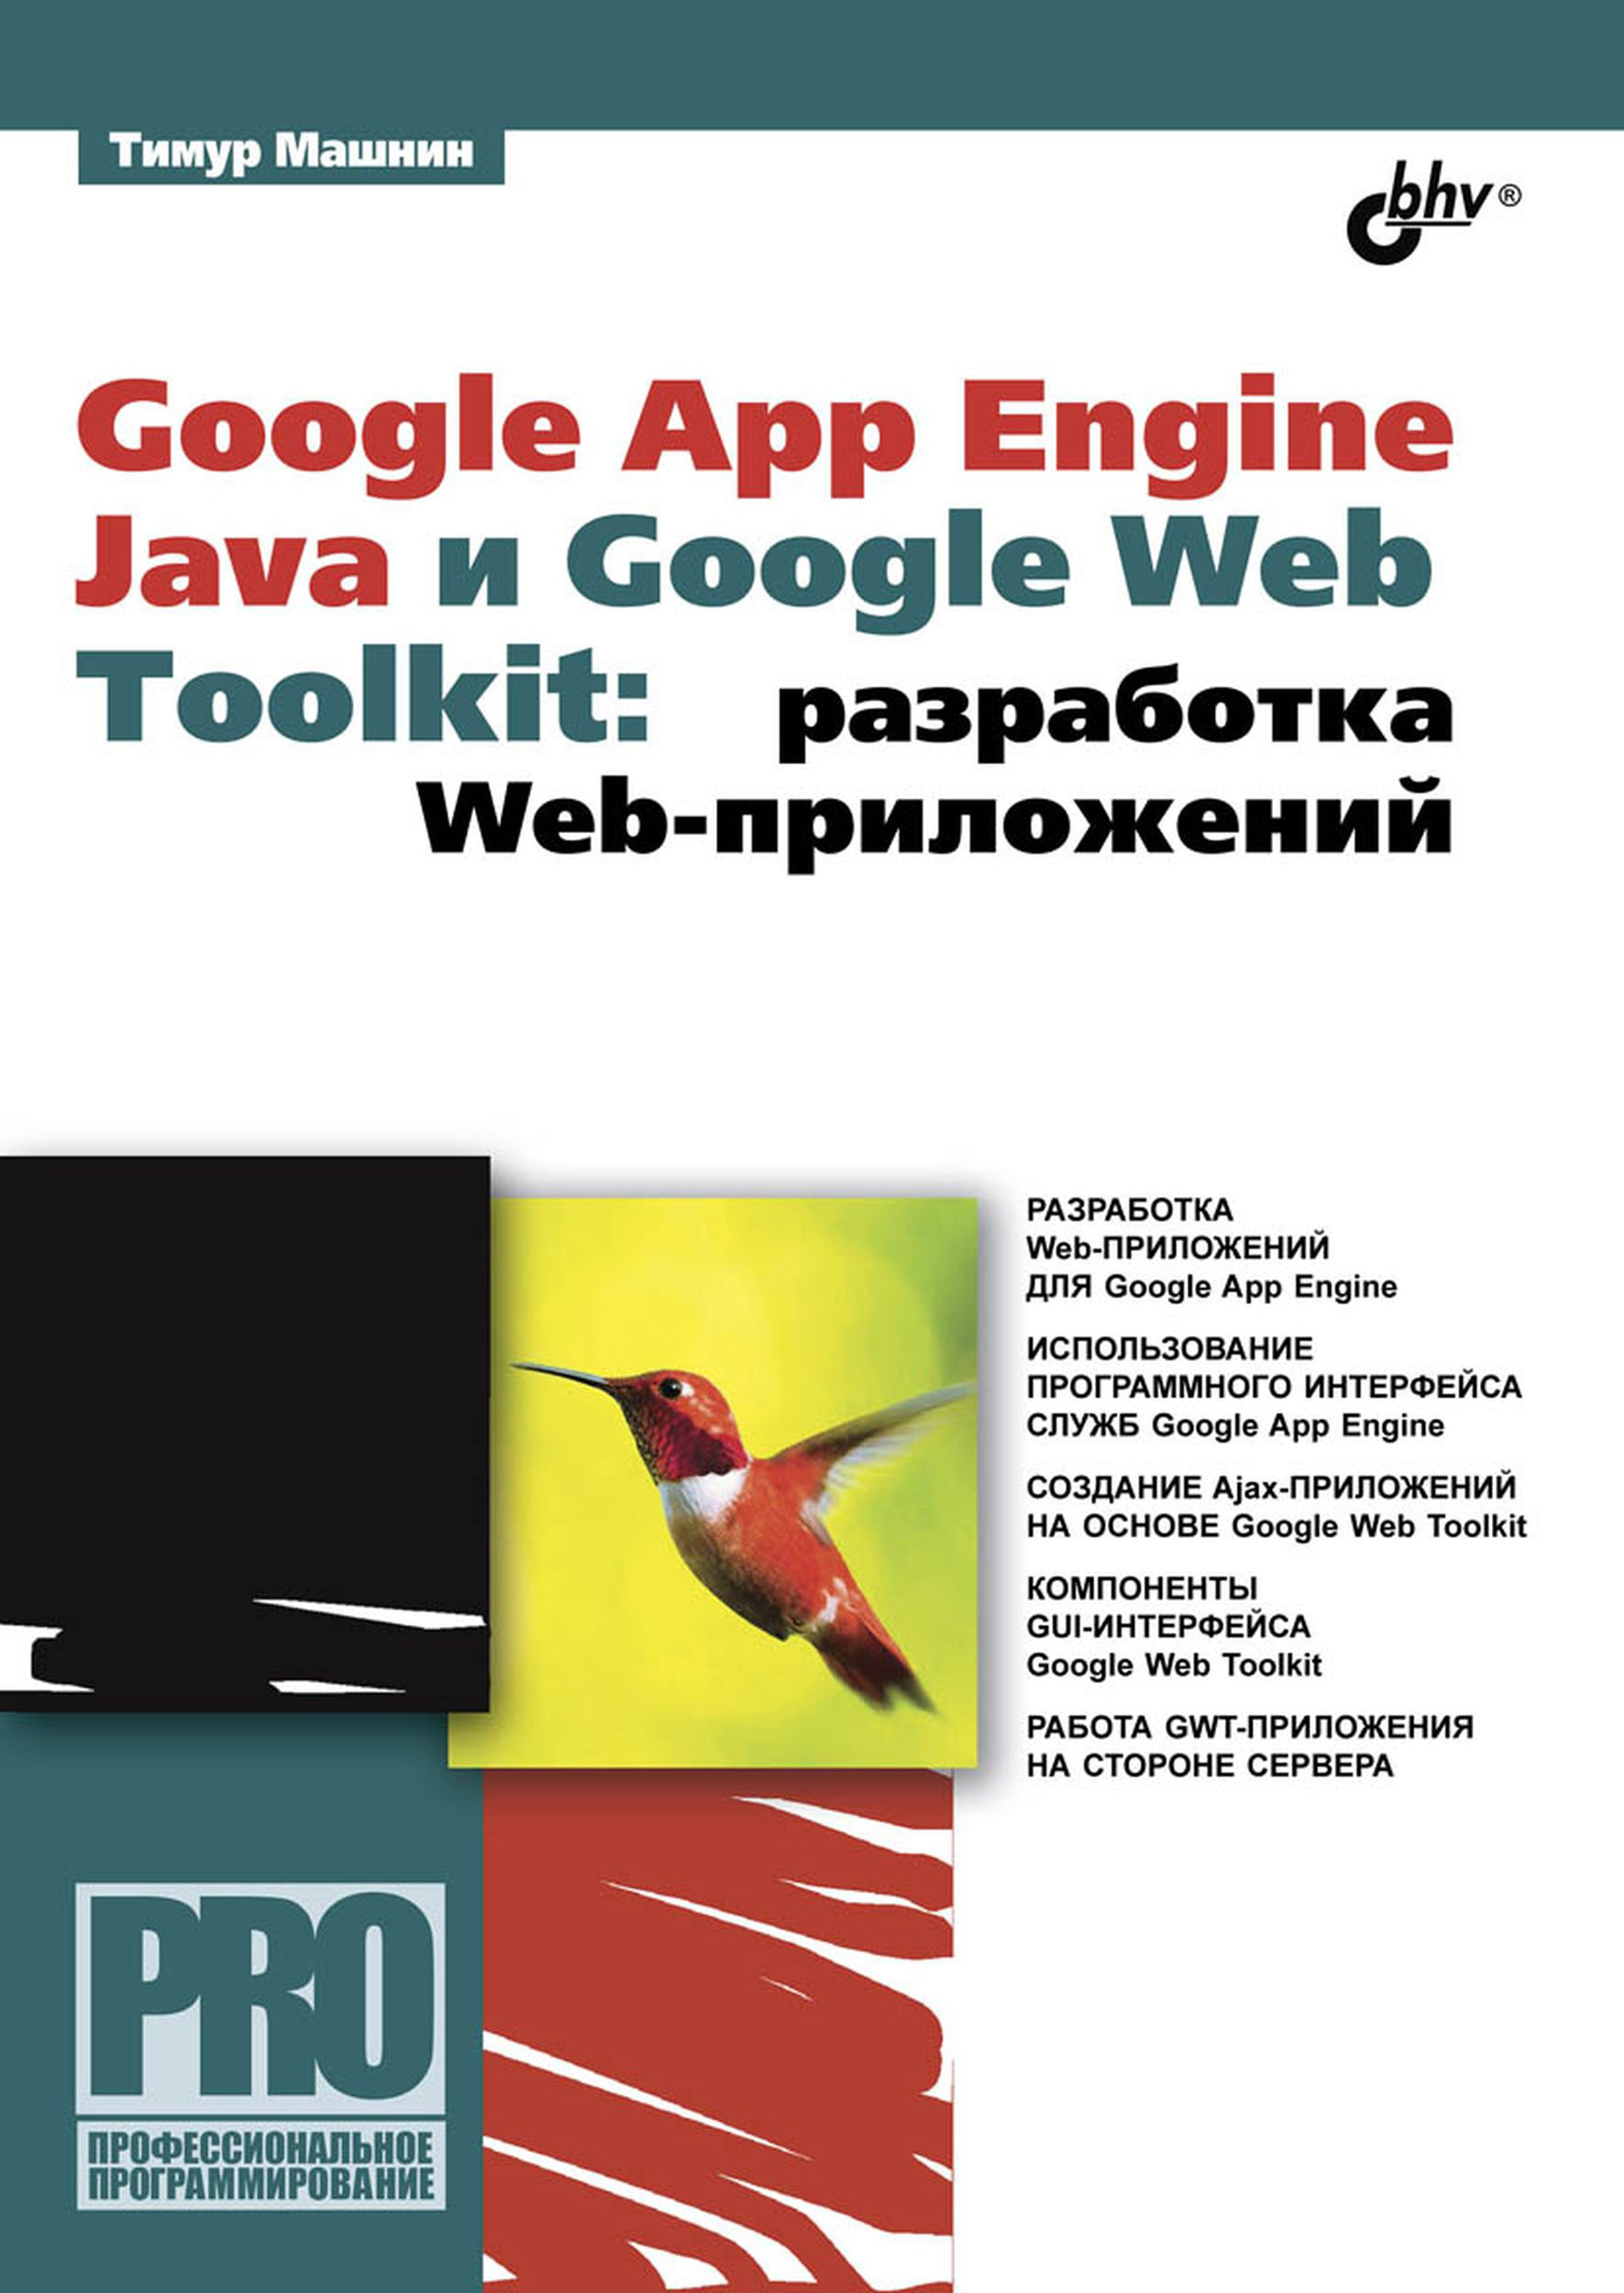 Google App Engine Javaи Google Web Toolkit: разработка Web-приложений